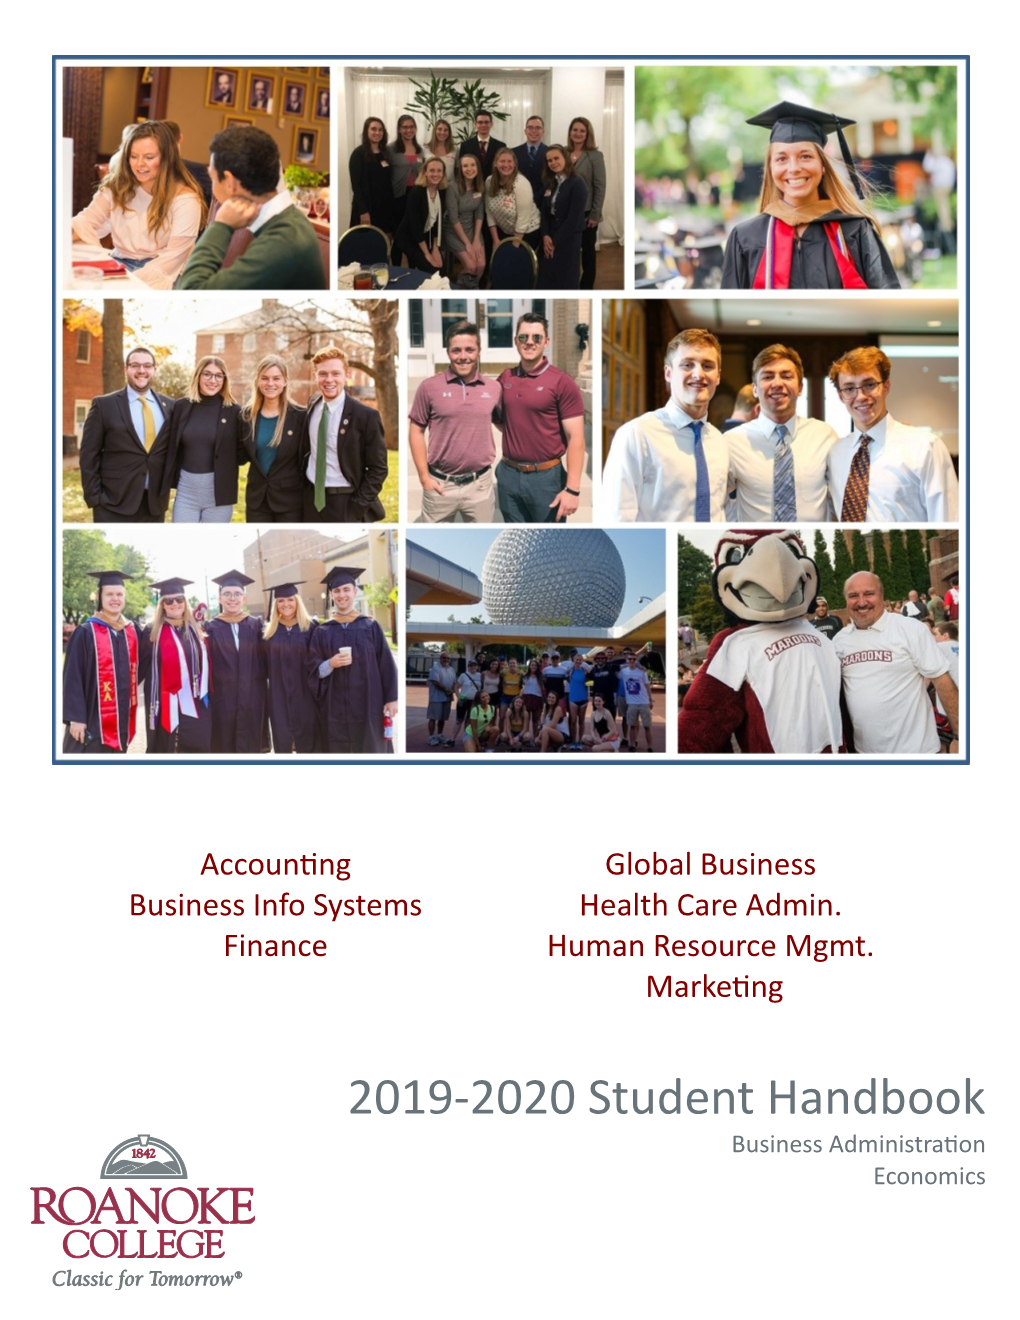 2019-2020 Student Handbook Business Administration Economics